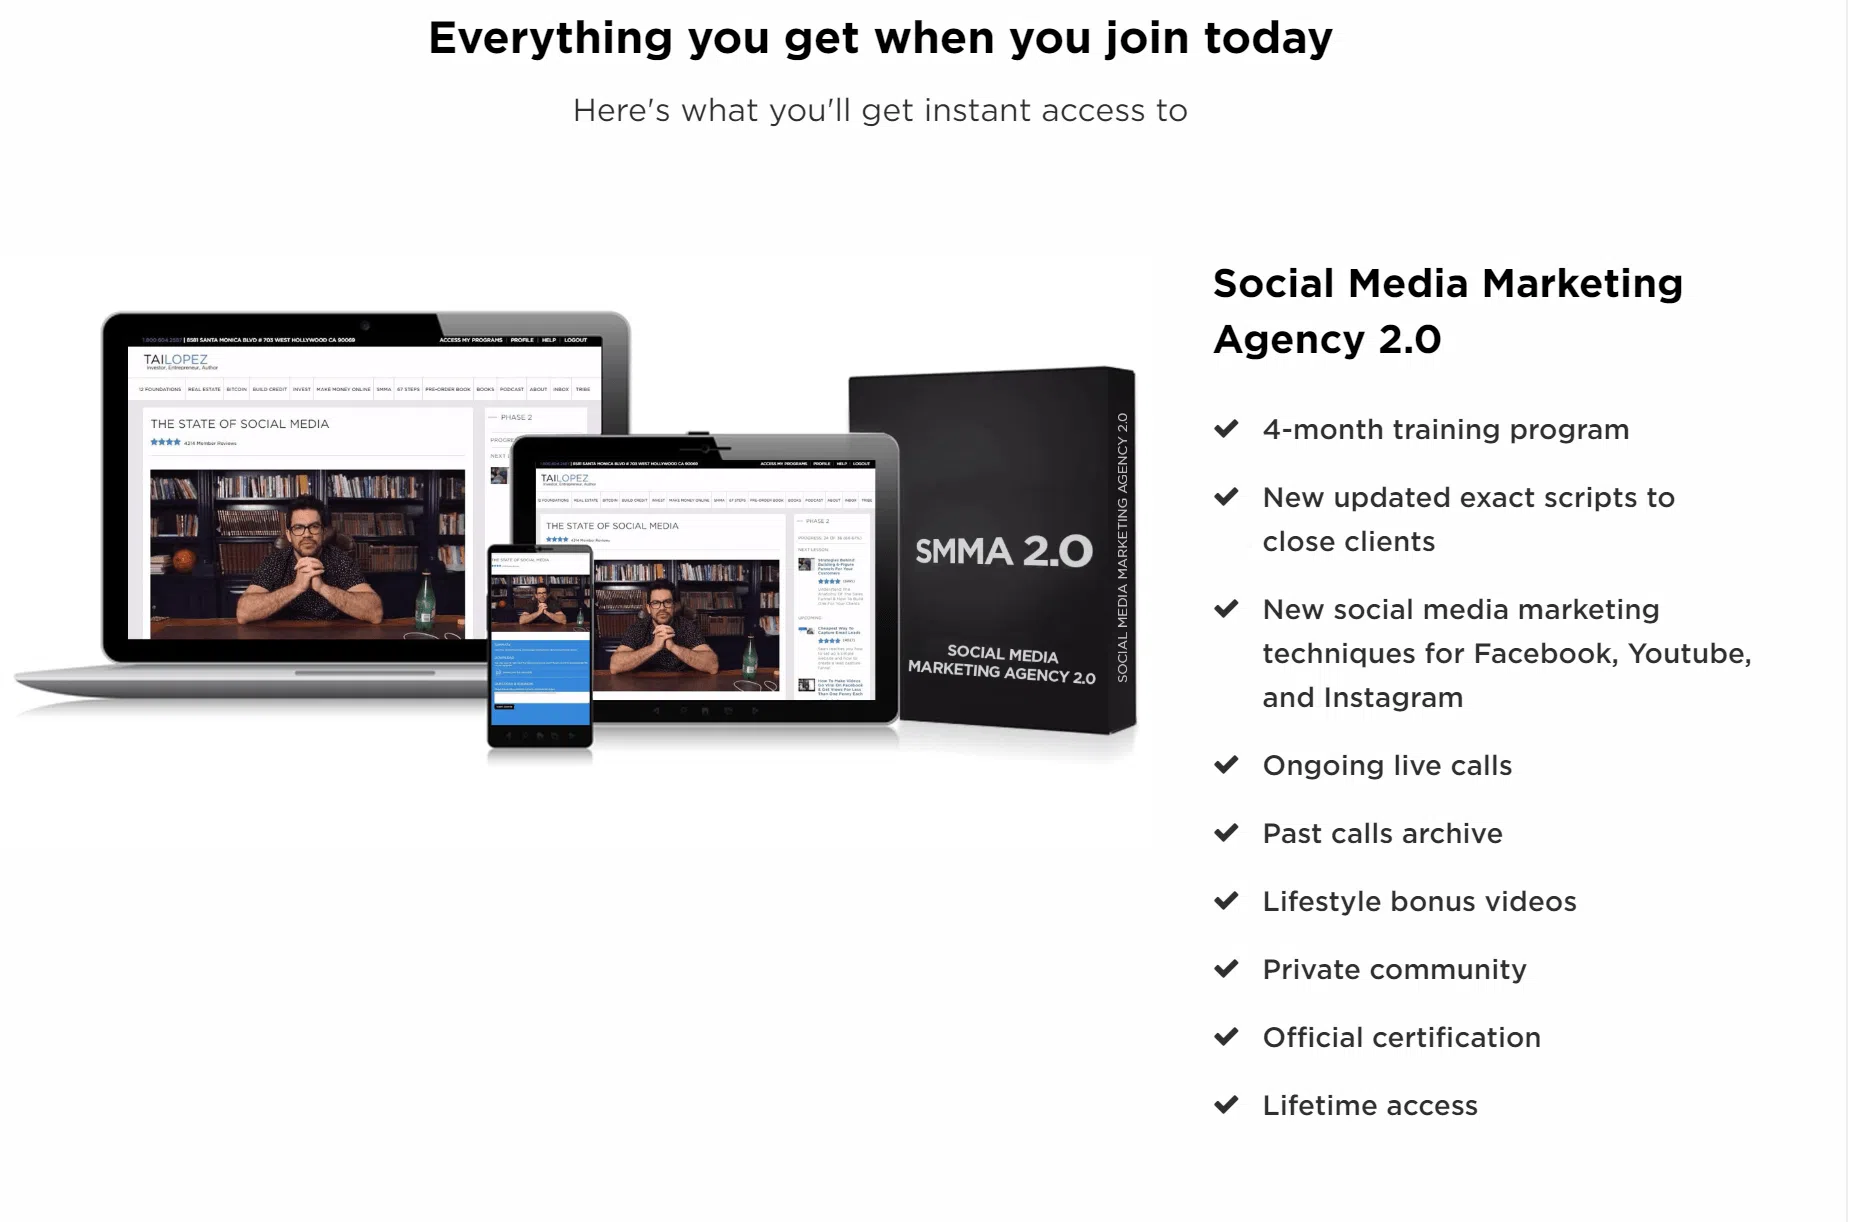 social media marketing agency 2.0- tai lopez scam